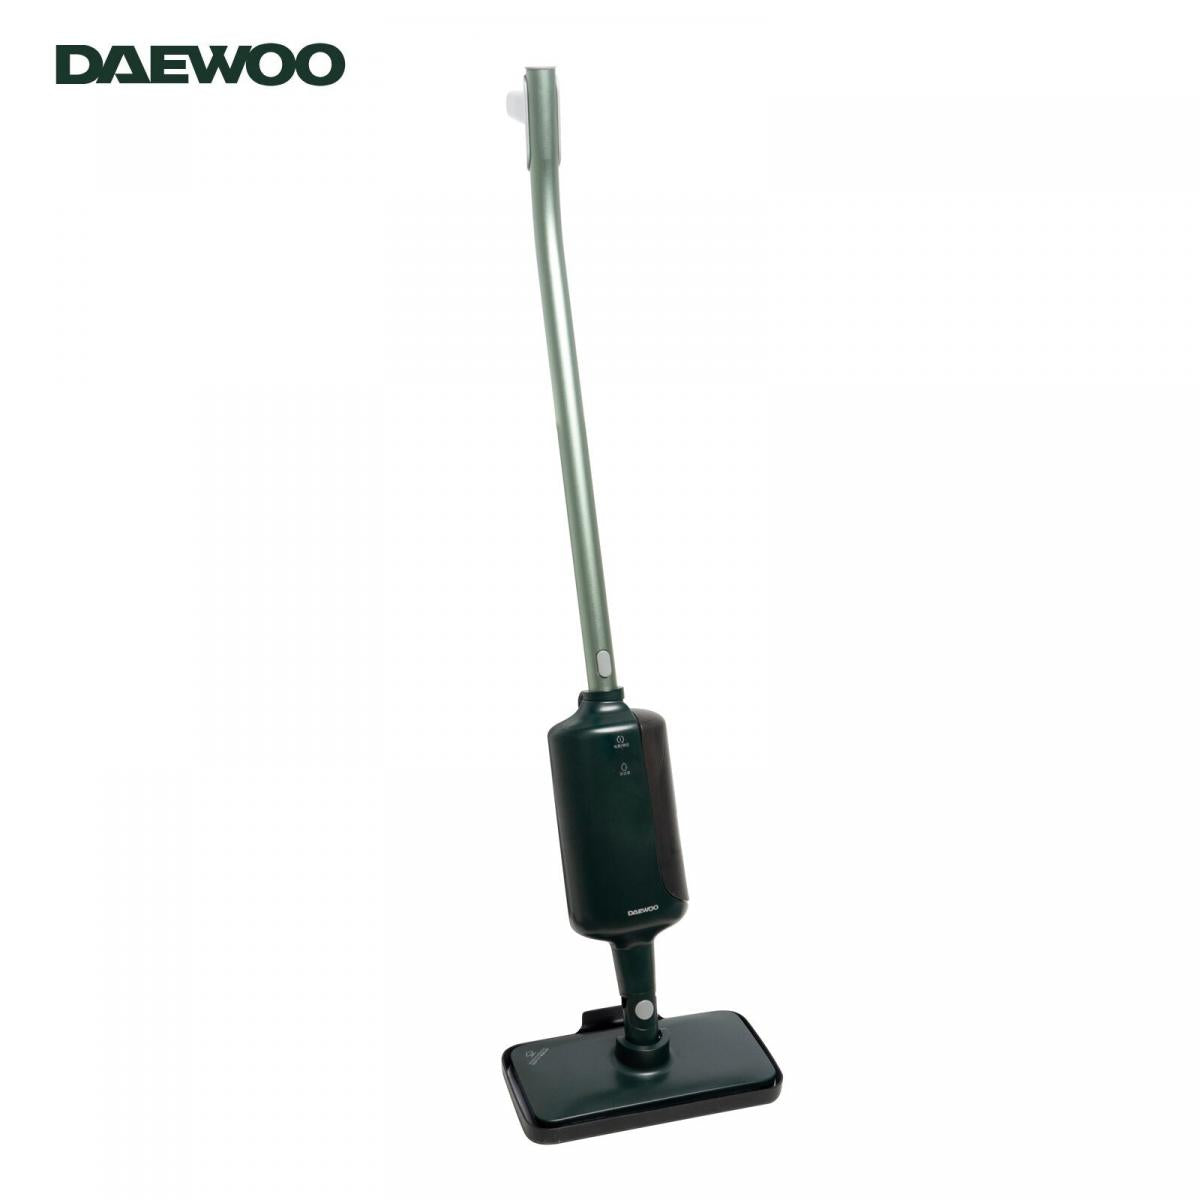 DAEWOO - South Korea's Daewoo antibacterial steam mop | Electric mop | Steam sterilization | High temperature sterilization | Mite removal SMOP01